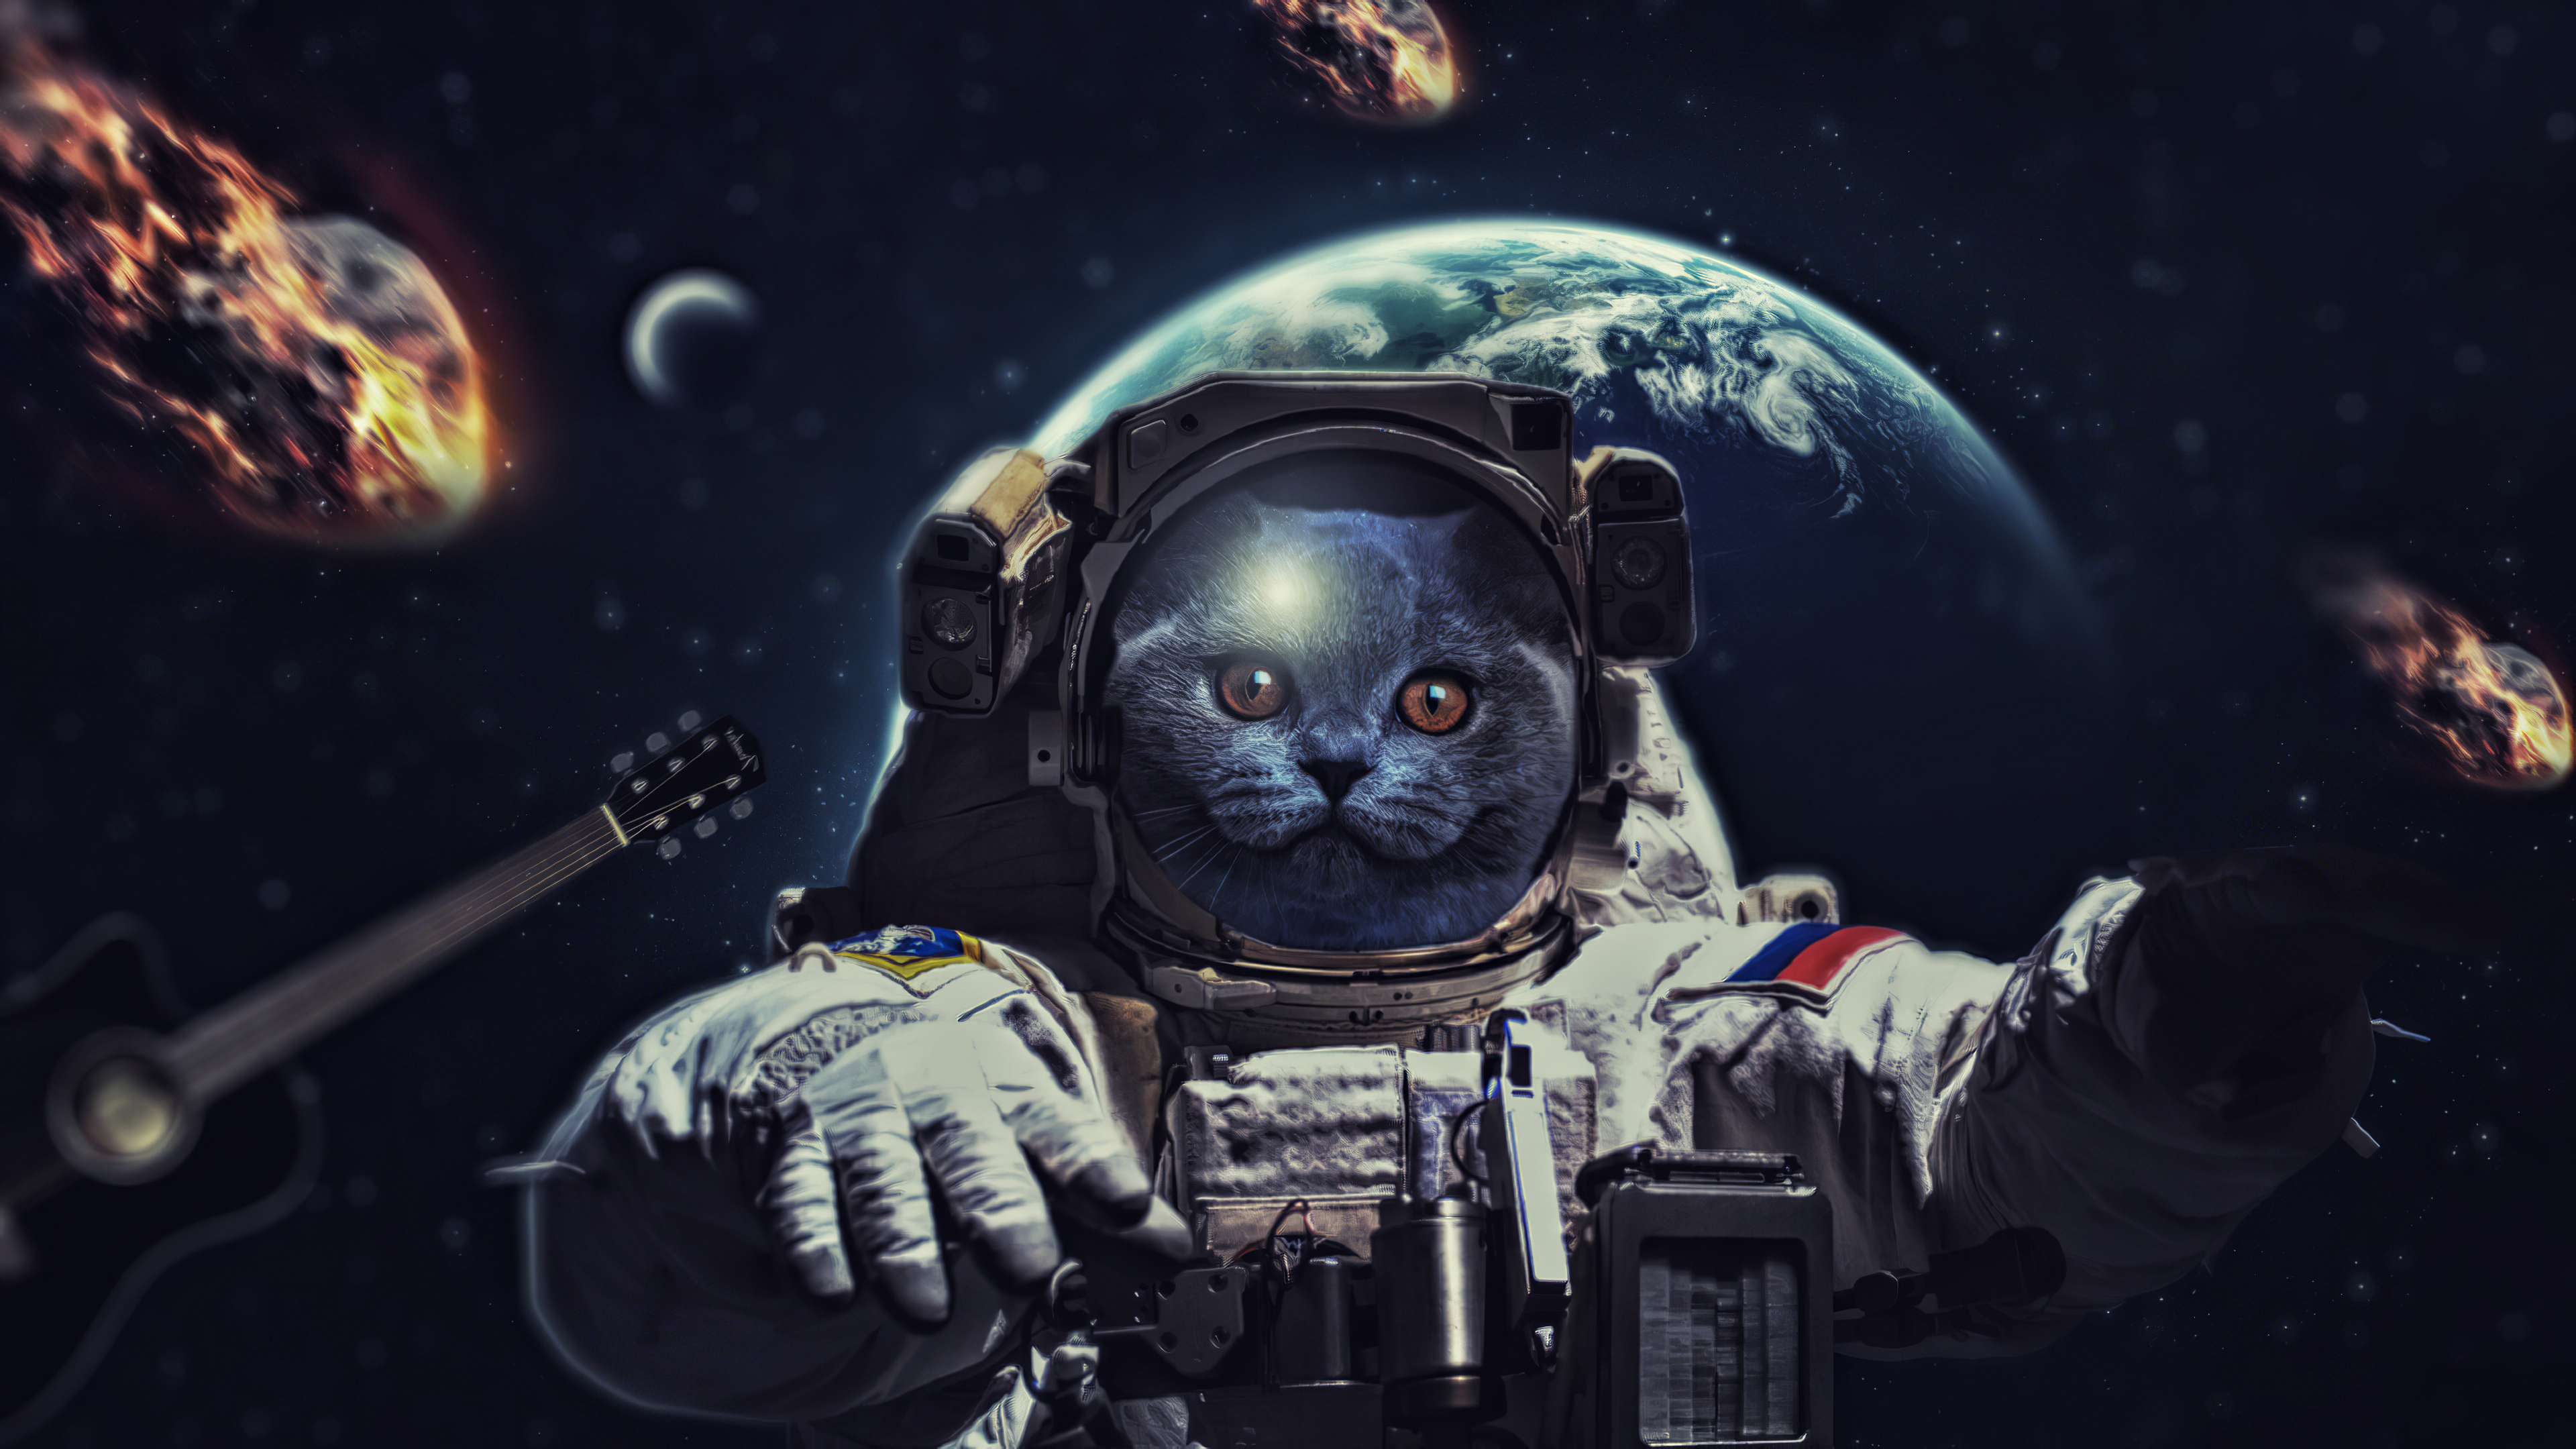 Descarga gratuita de fondo de pantalla para móvil de Gato, Espacio, Ciencia Ficción, Astronauta.